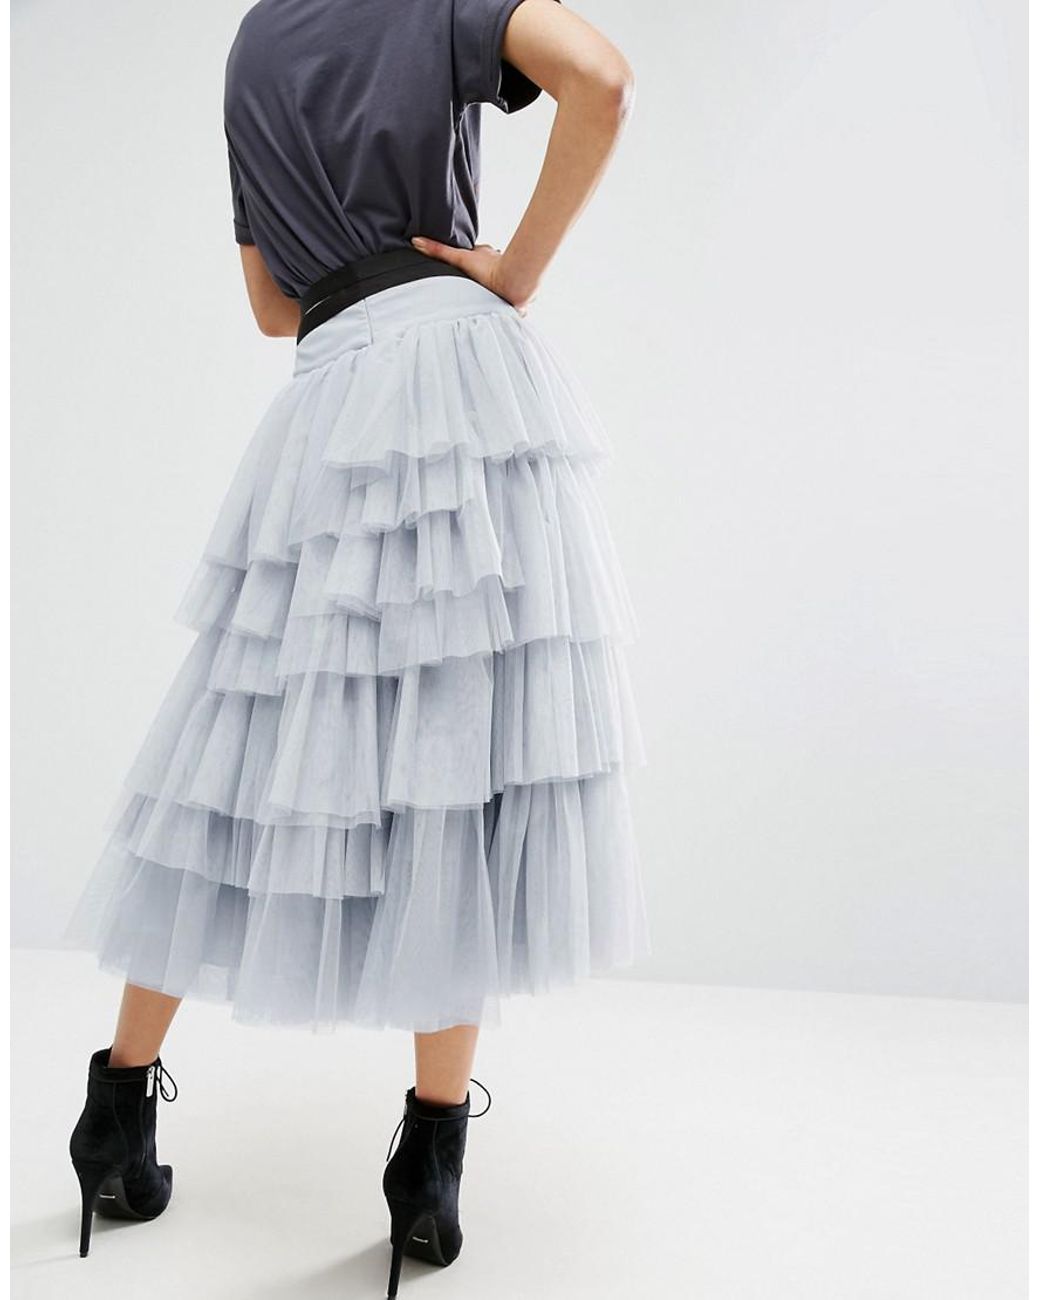 Трехъярусная юбка. Многослойная юбка. Многослойная шифоновая юбка. Многослойная фатиновая юбка. Черная многослойная юбка.